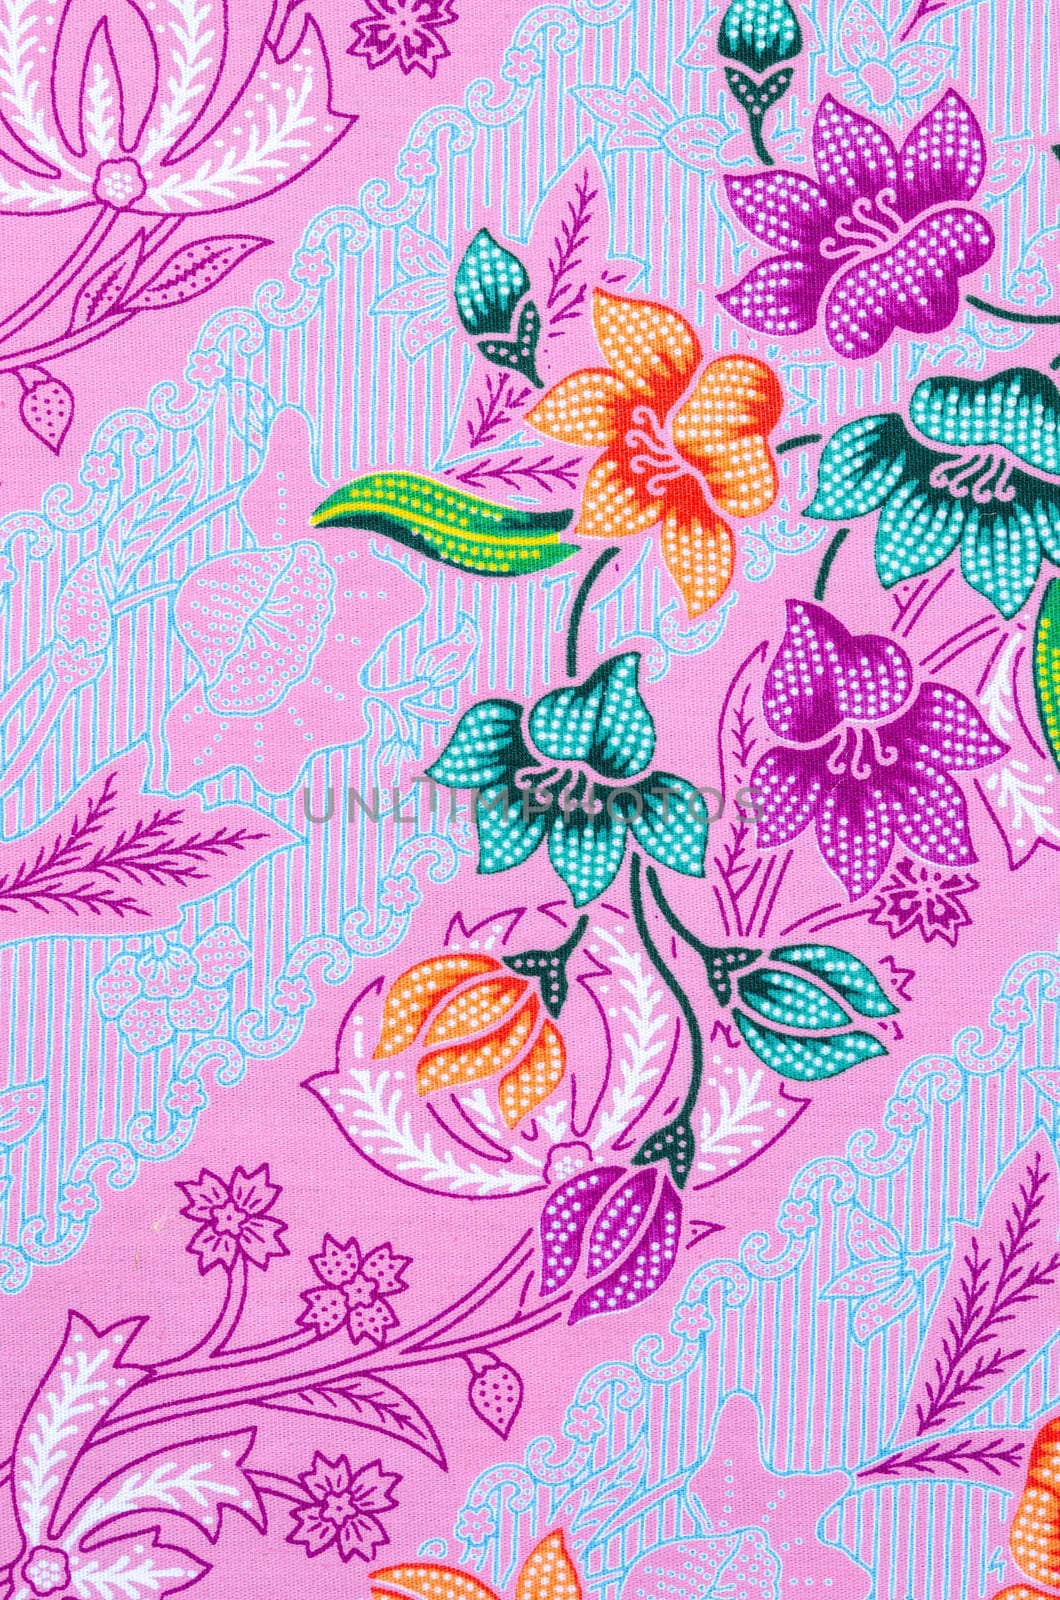 Abstract bright textile in batik's technique.